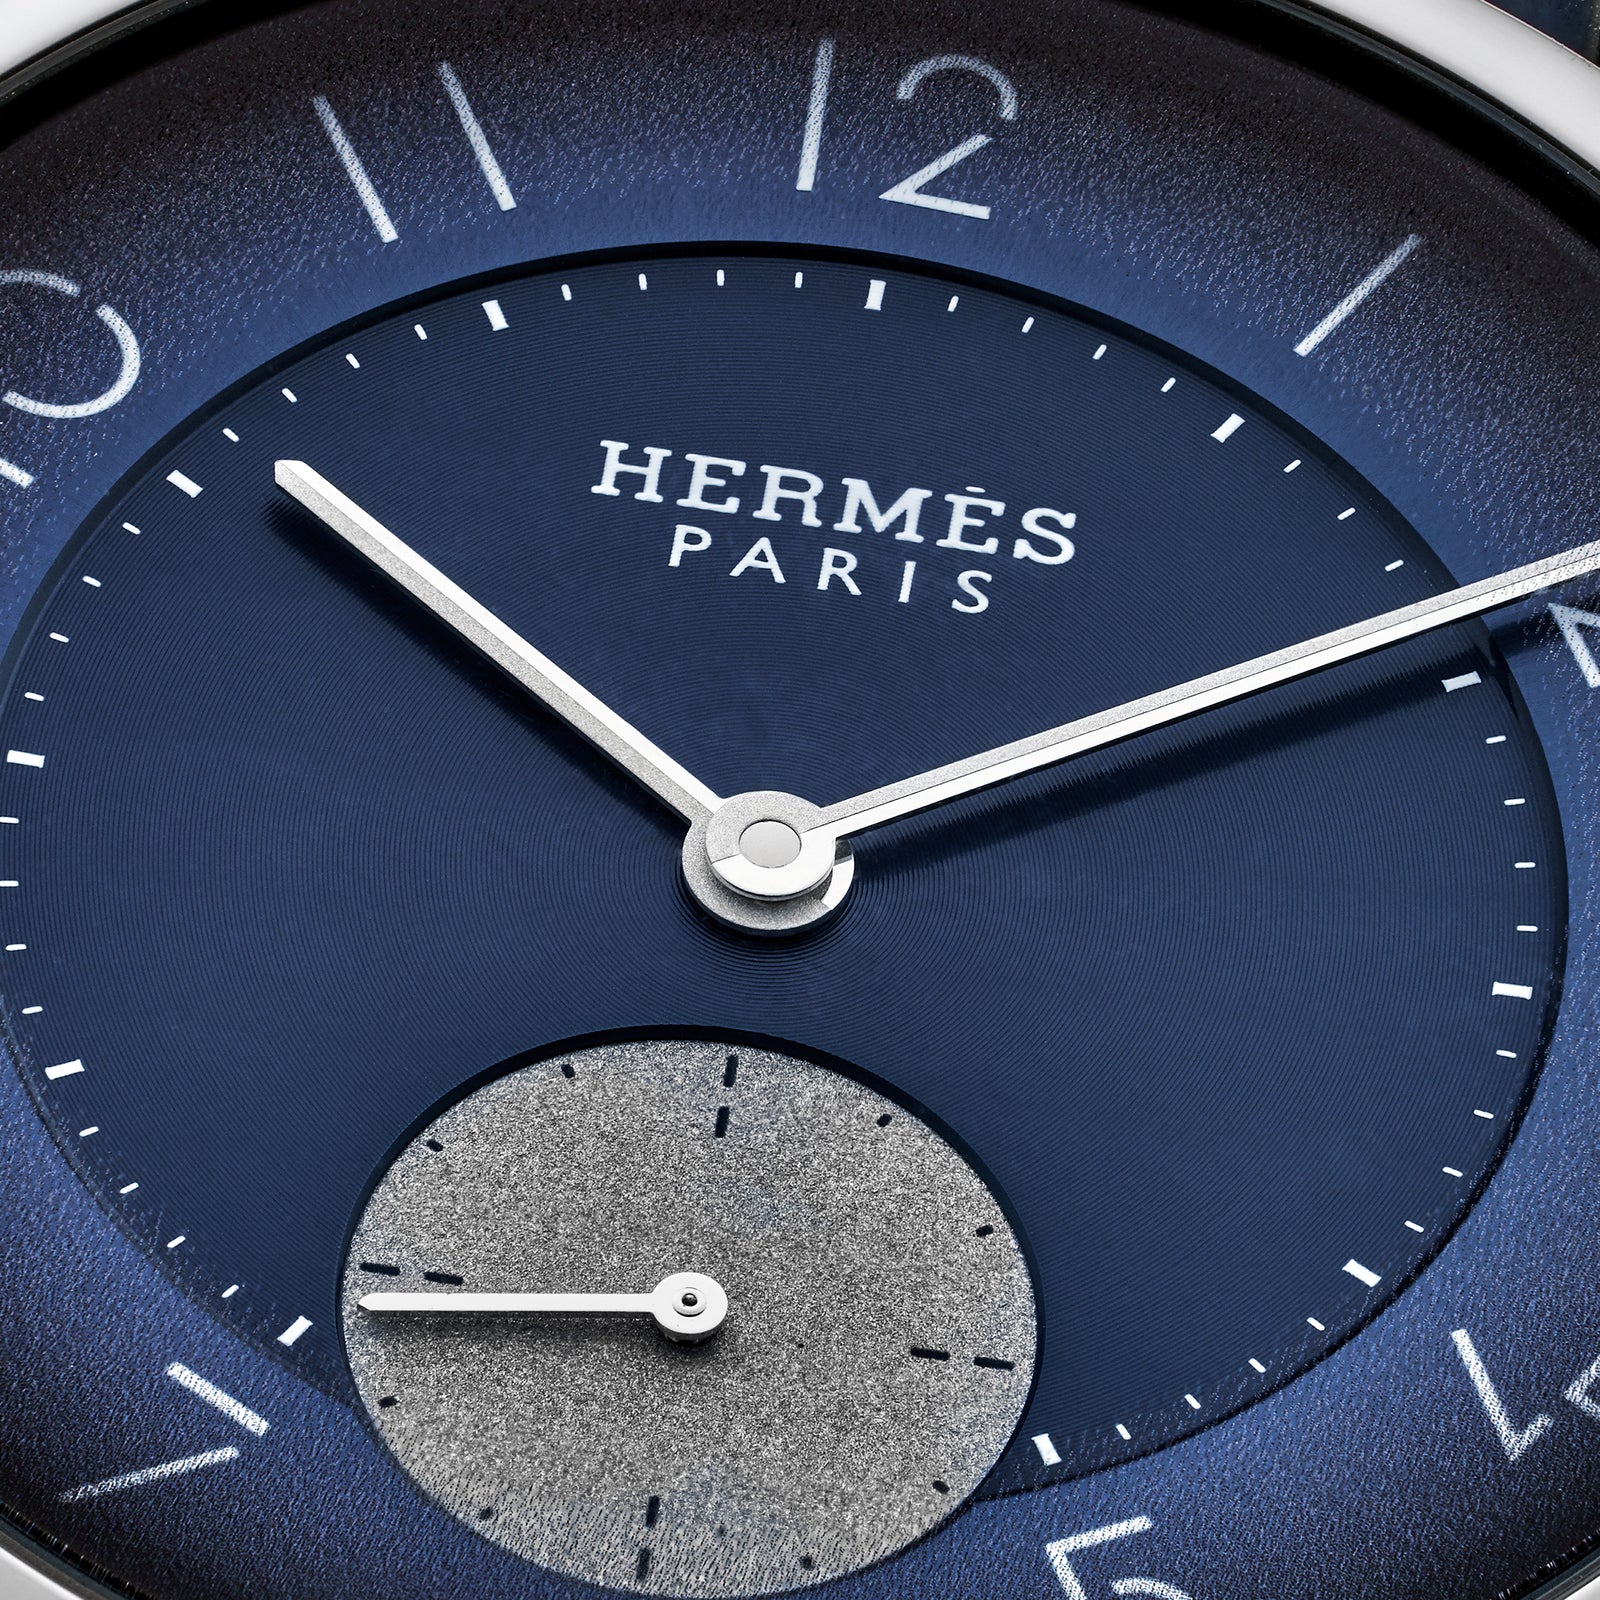 hermes hodinkee watch